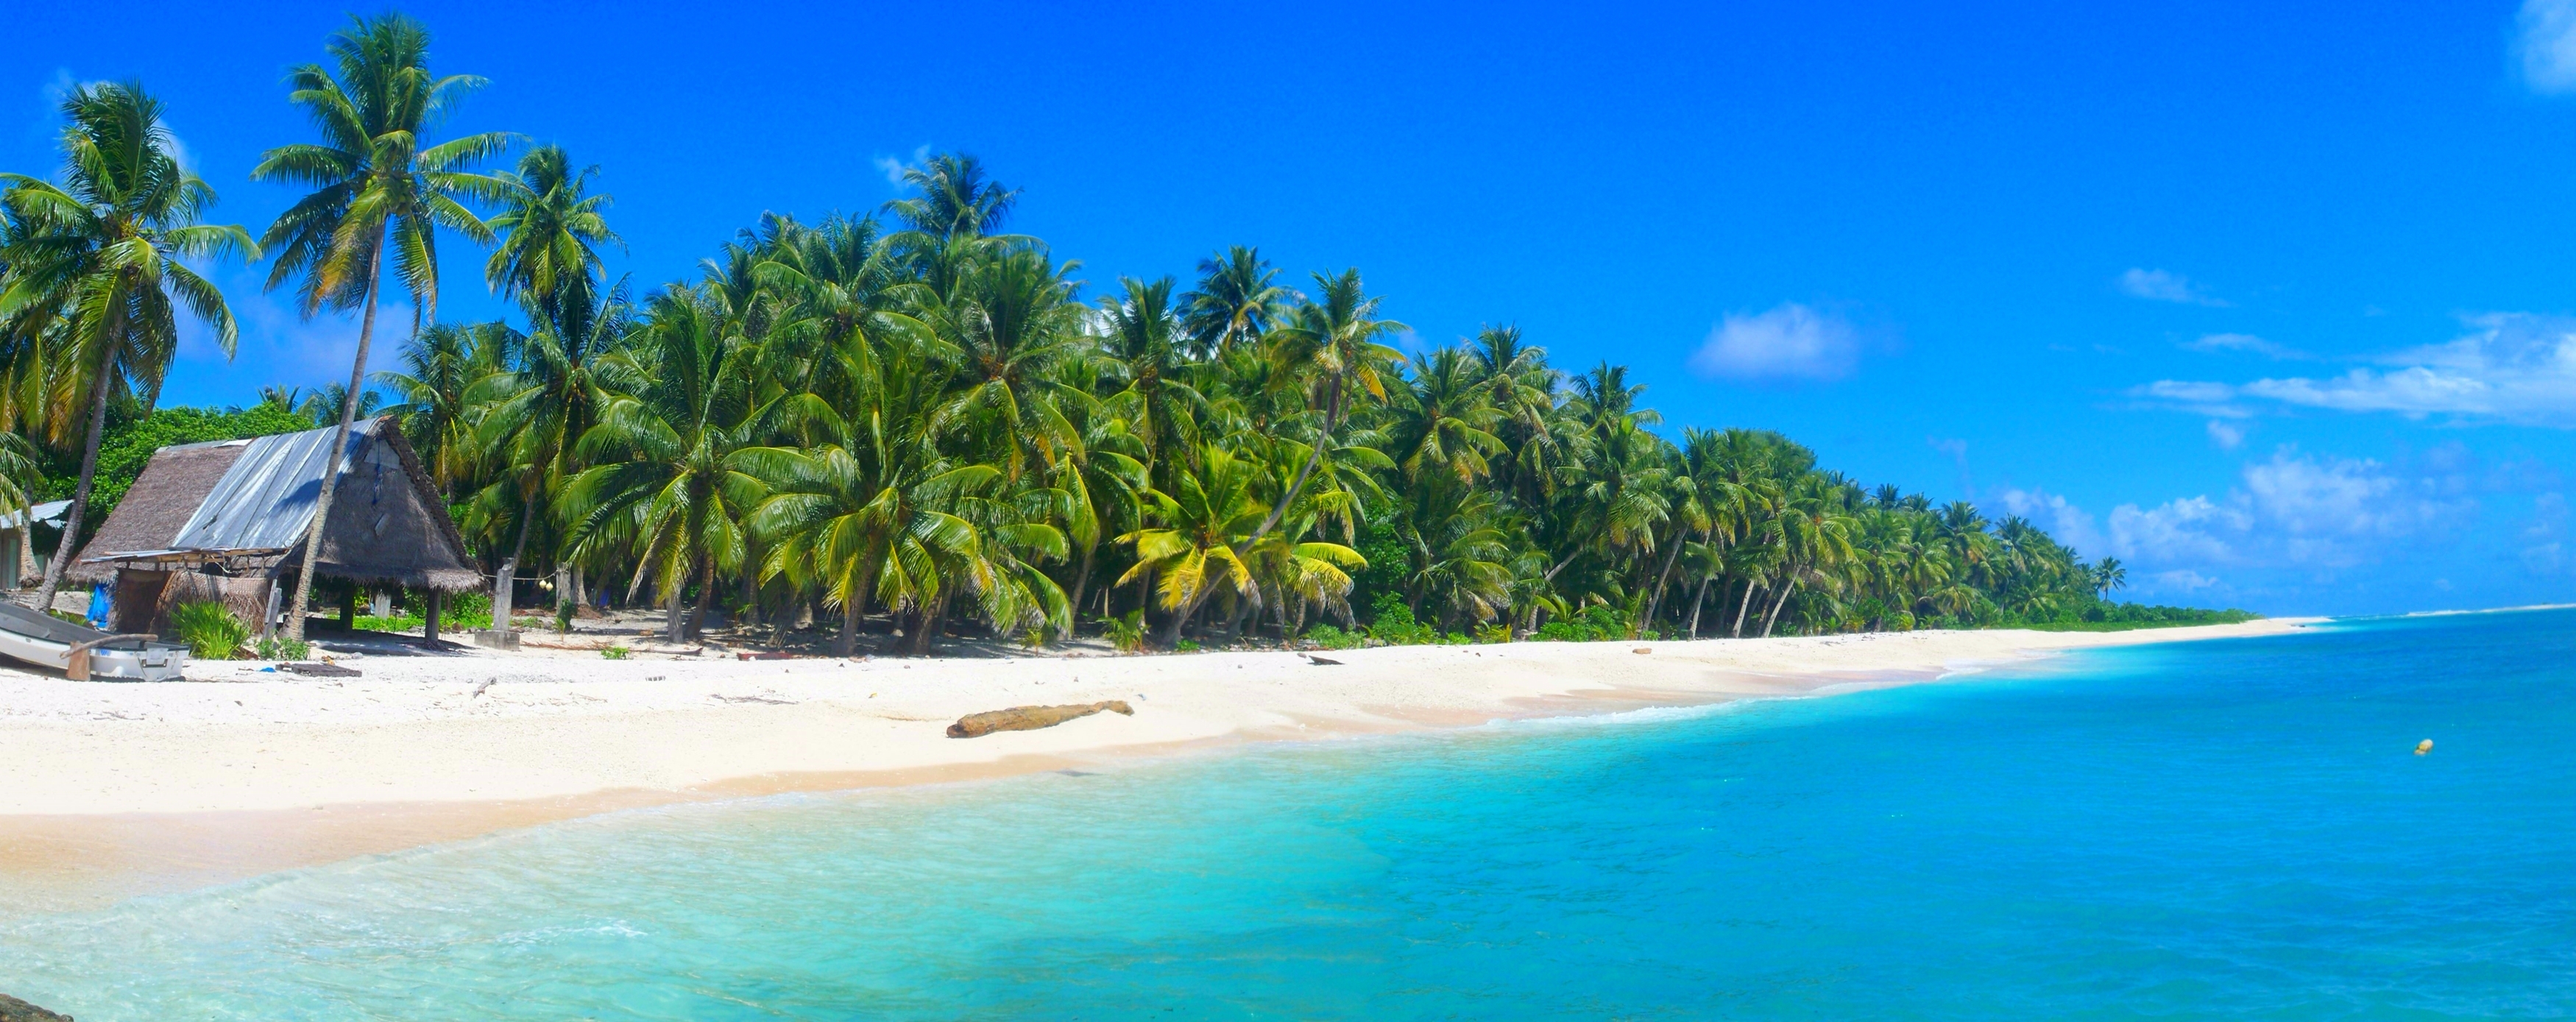 Boat Micronesia Turquoise Sea Tropical Paradise Wallpaper